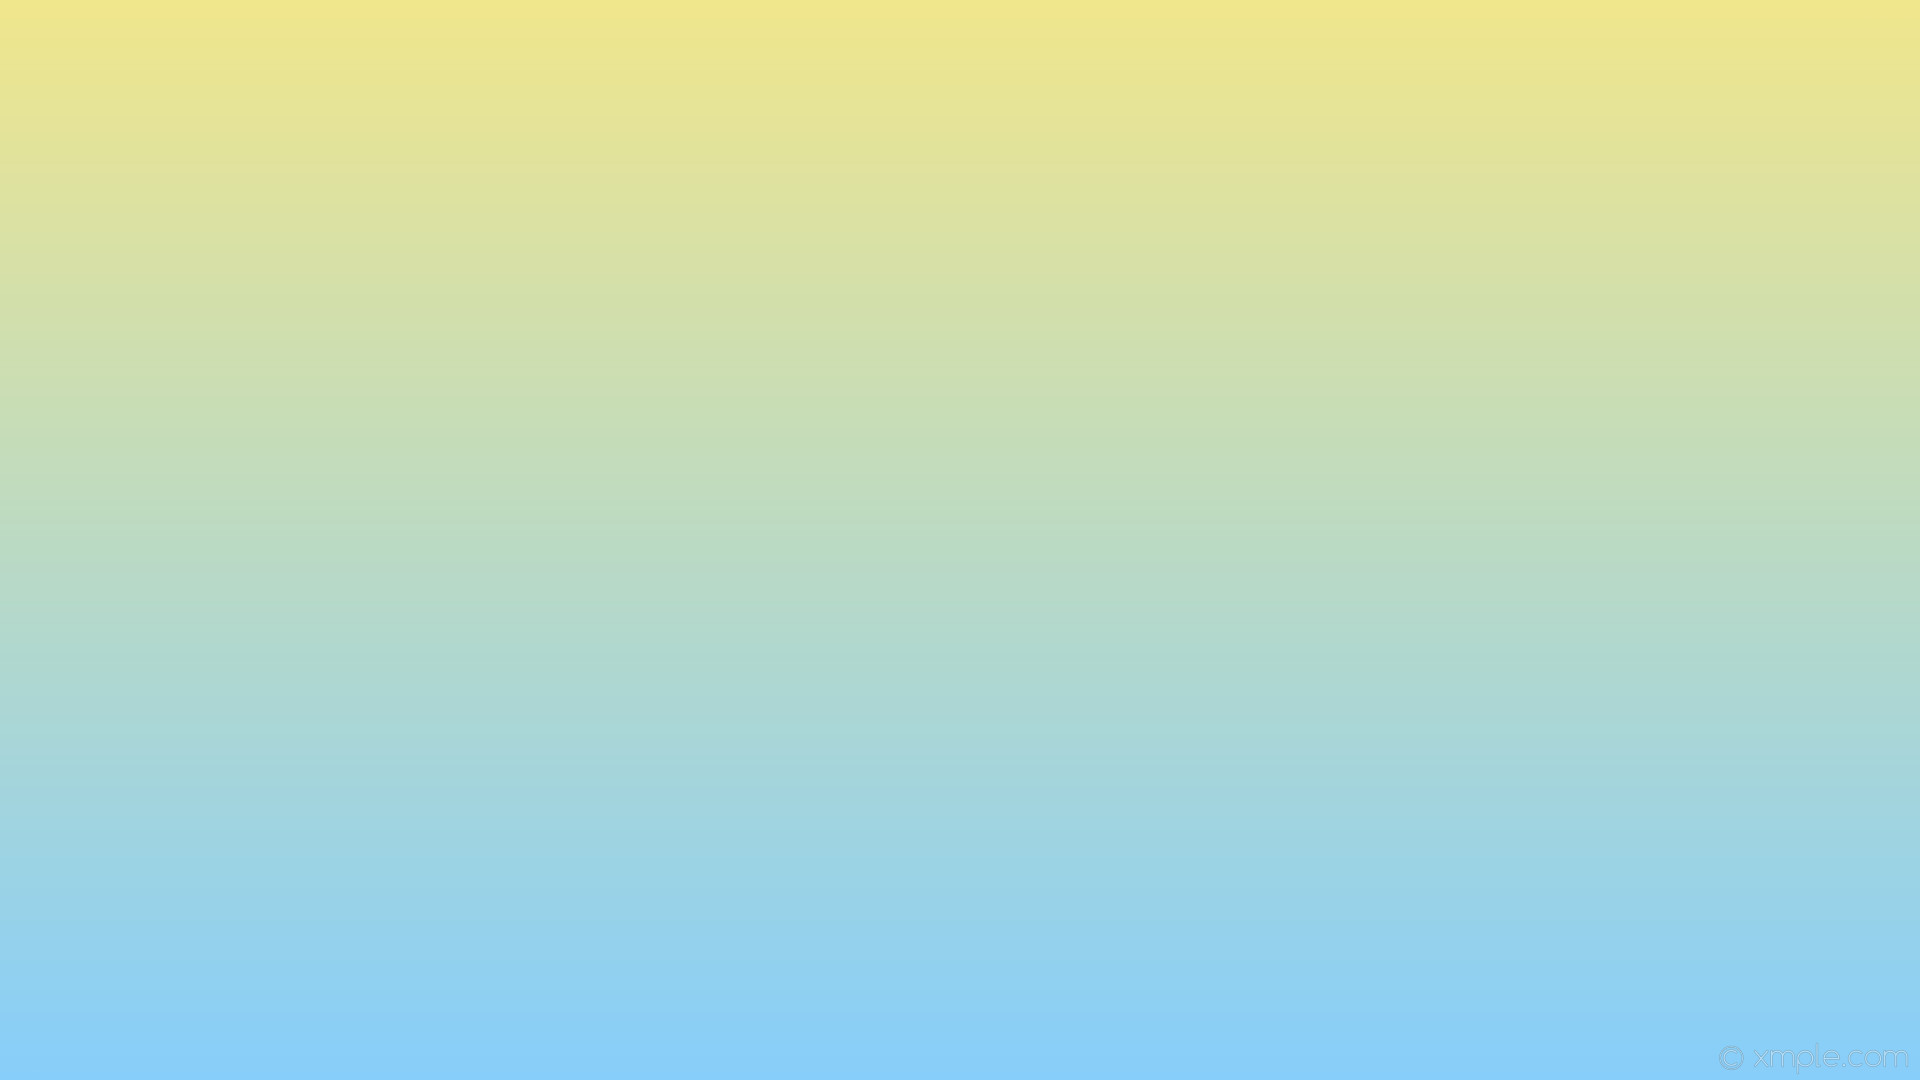 Wallpaper blue gradient yellow linear light sky blue khaki cefa fec ã